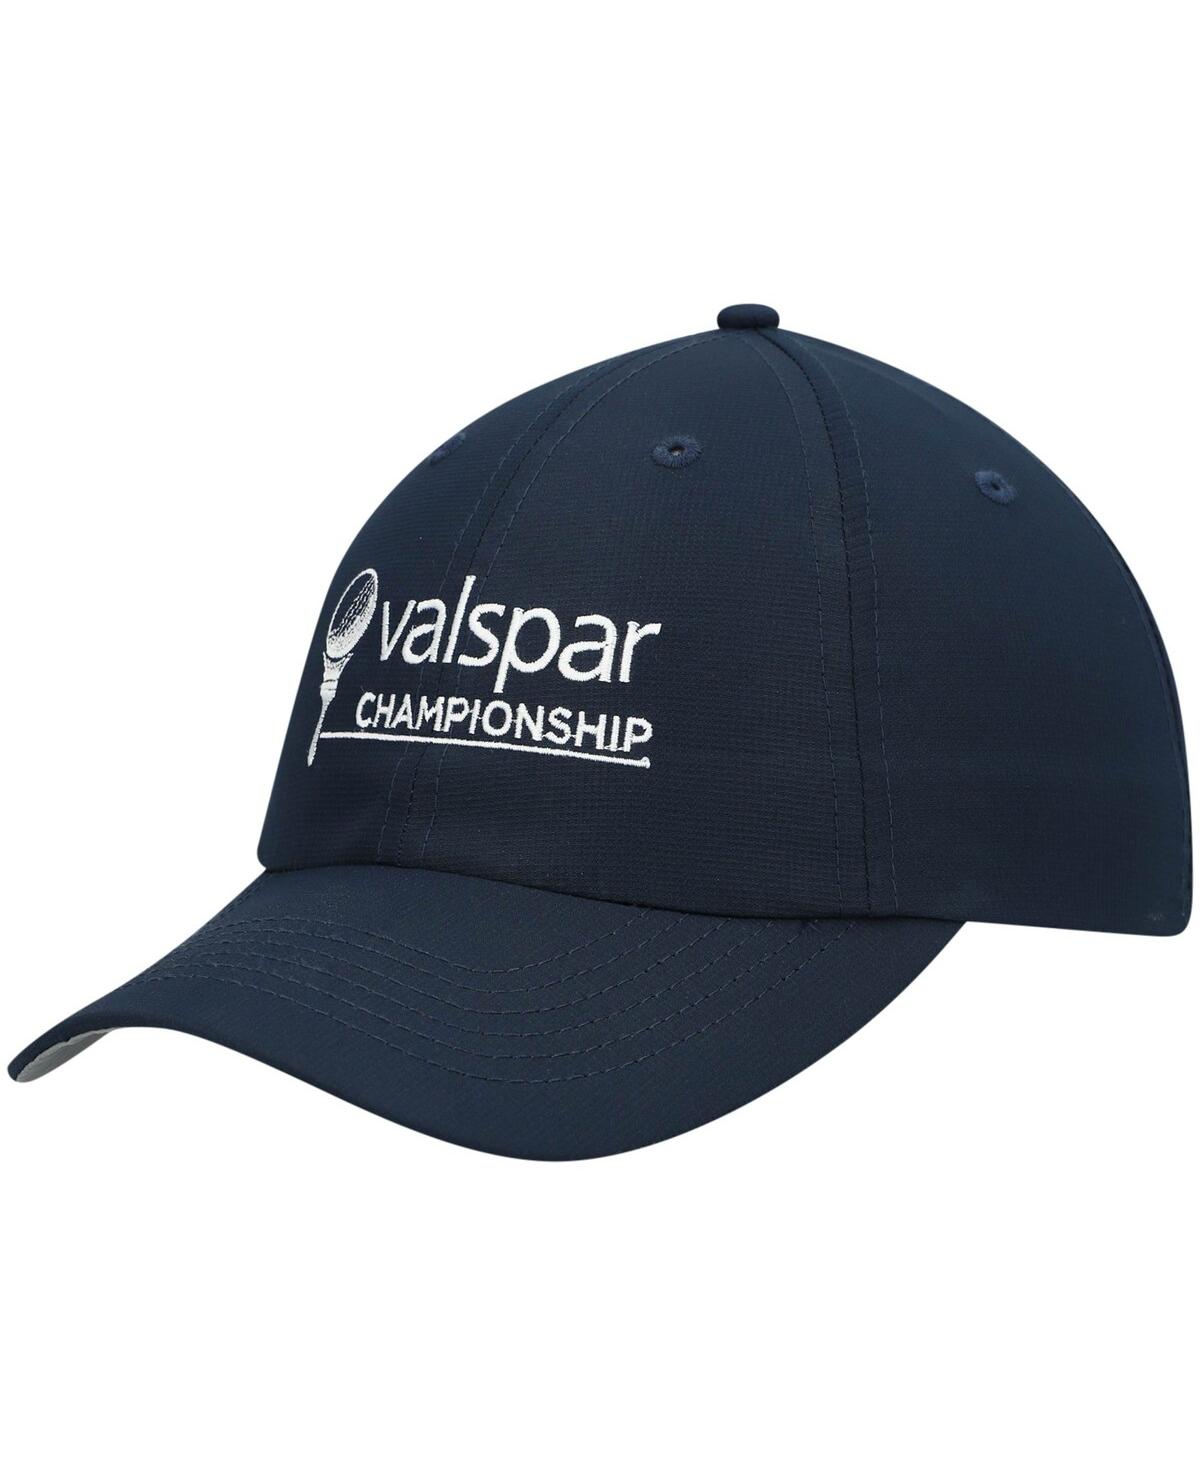 Shop Imperial Women's  Navy Valspar Championship Original Performance Adjustable Hat